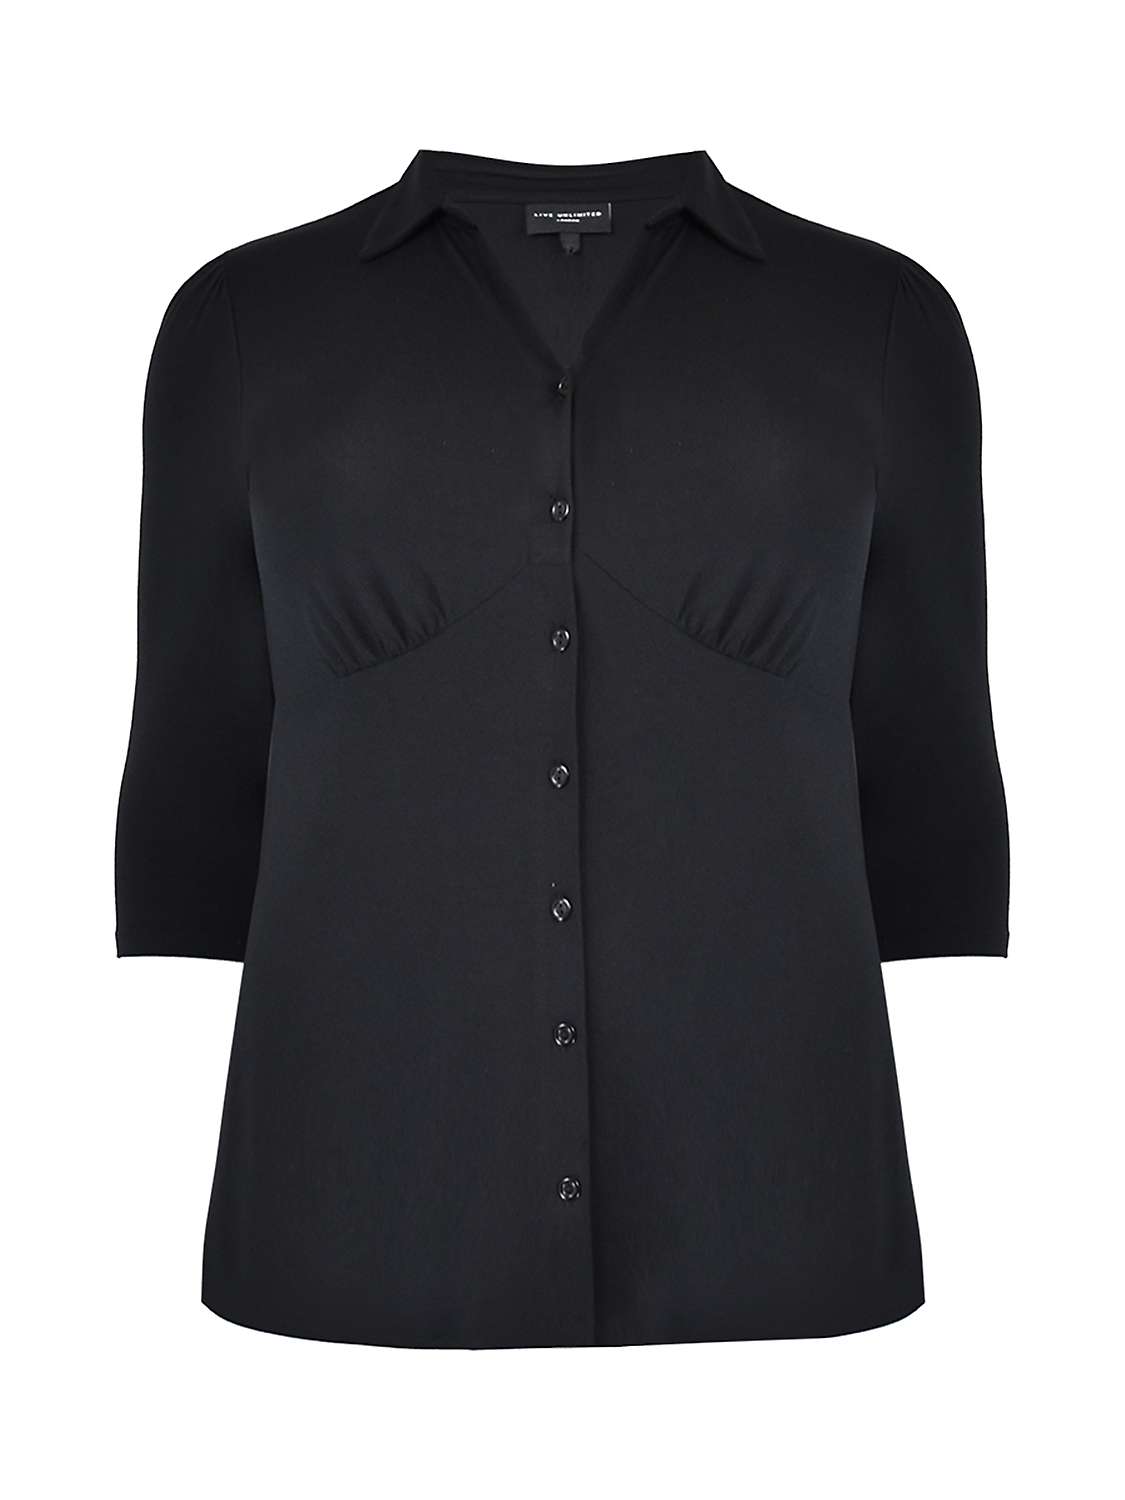 Buy Live Unlimited Curve Black Empire Seam Jersey Shirt, Black Online at johnlewis.com